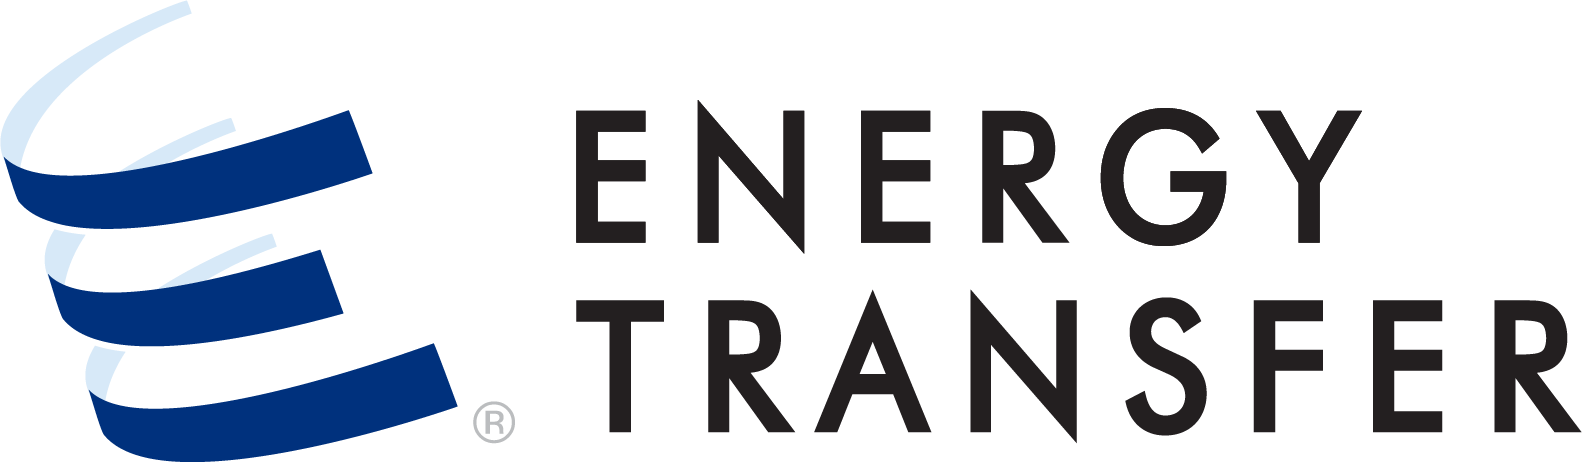 Energy Transfer Logo Horizontal Stack 1 - Propane Fall Contest